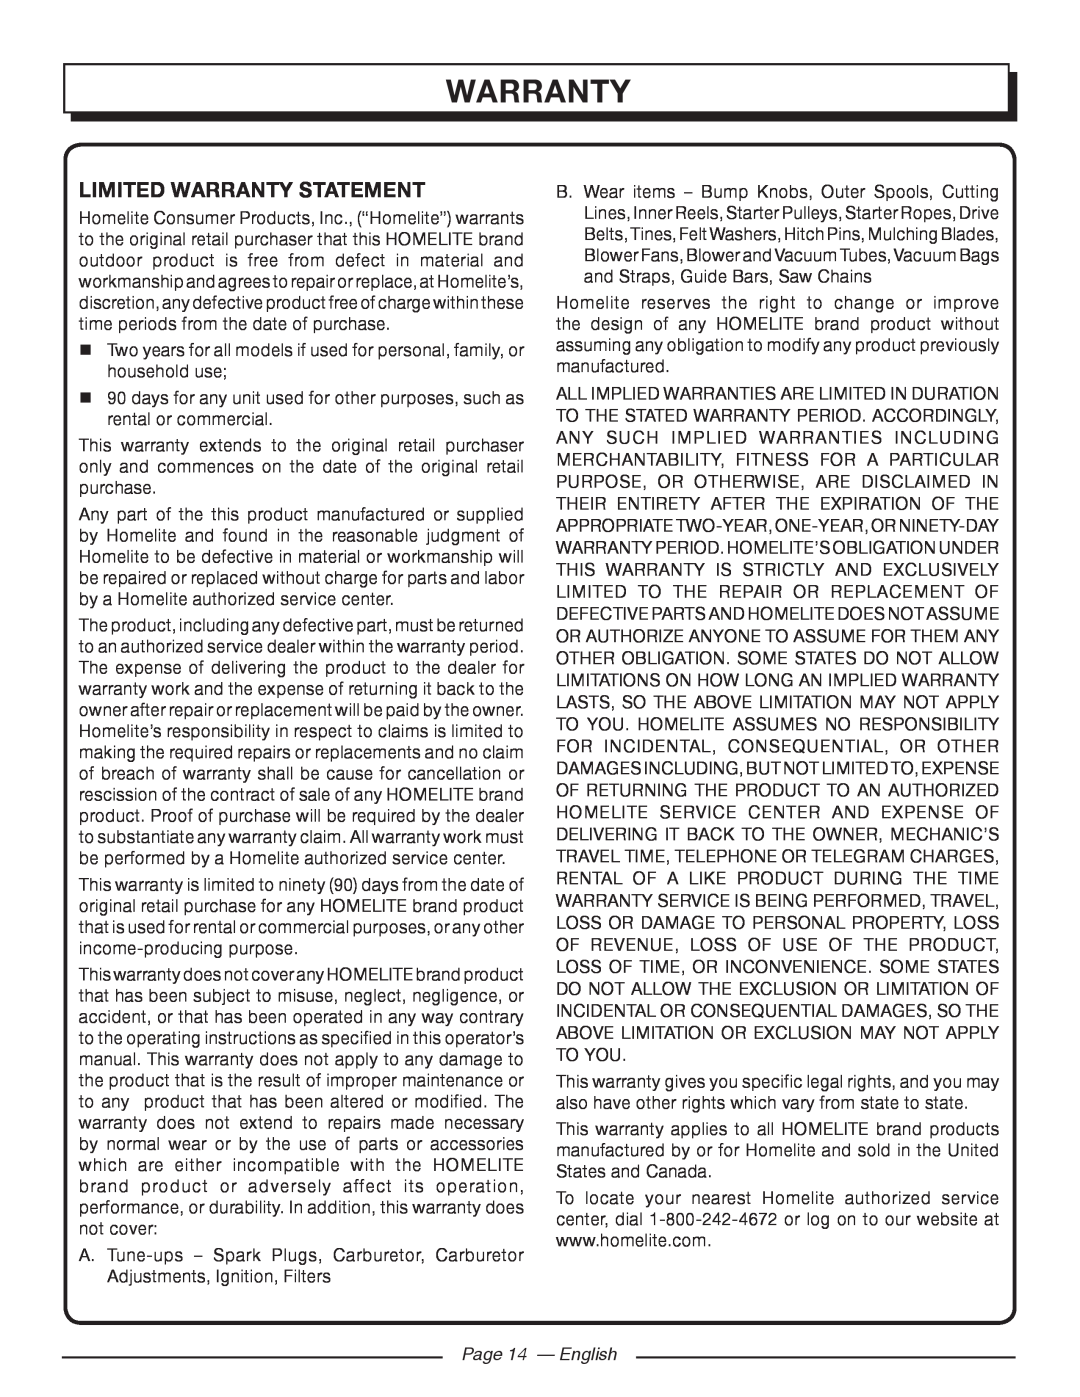 Homelite UT44171 manuel dutilisation Limited Warranty Statement, Page 14 - English 